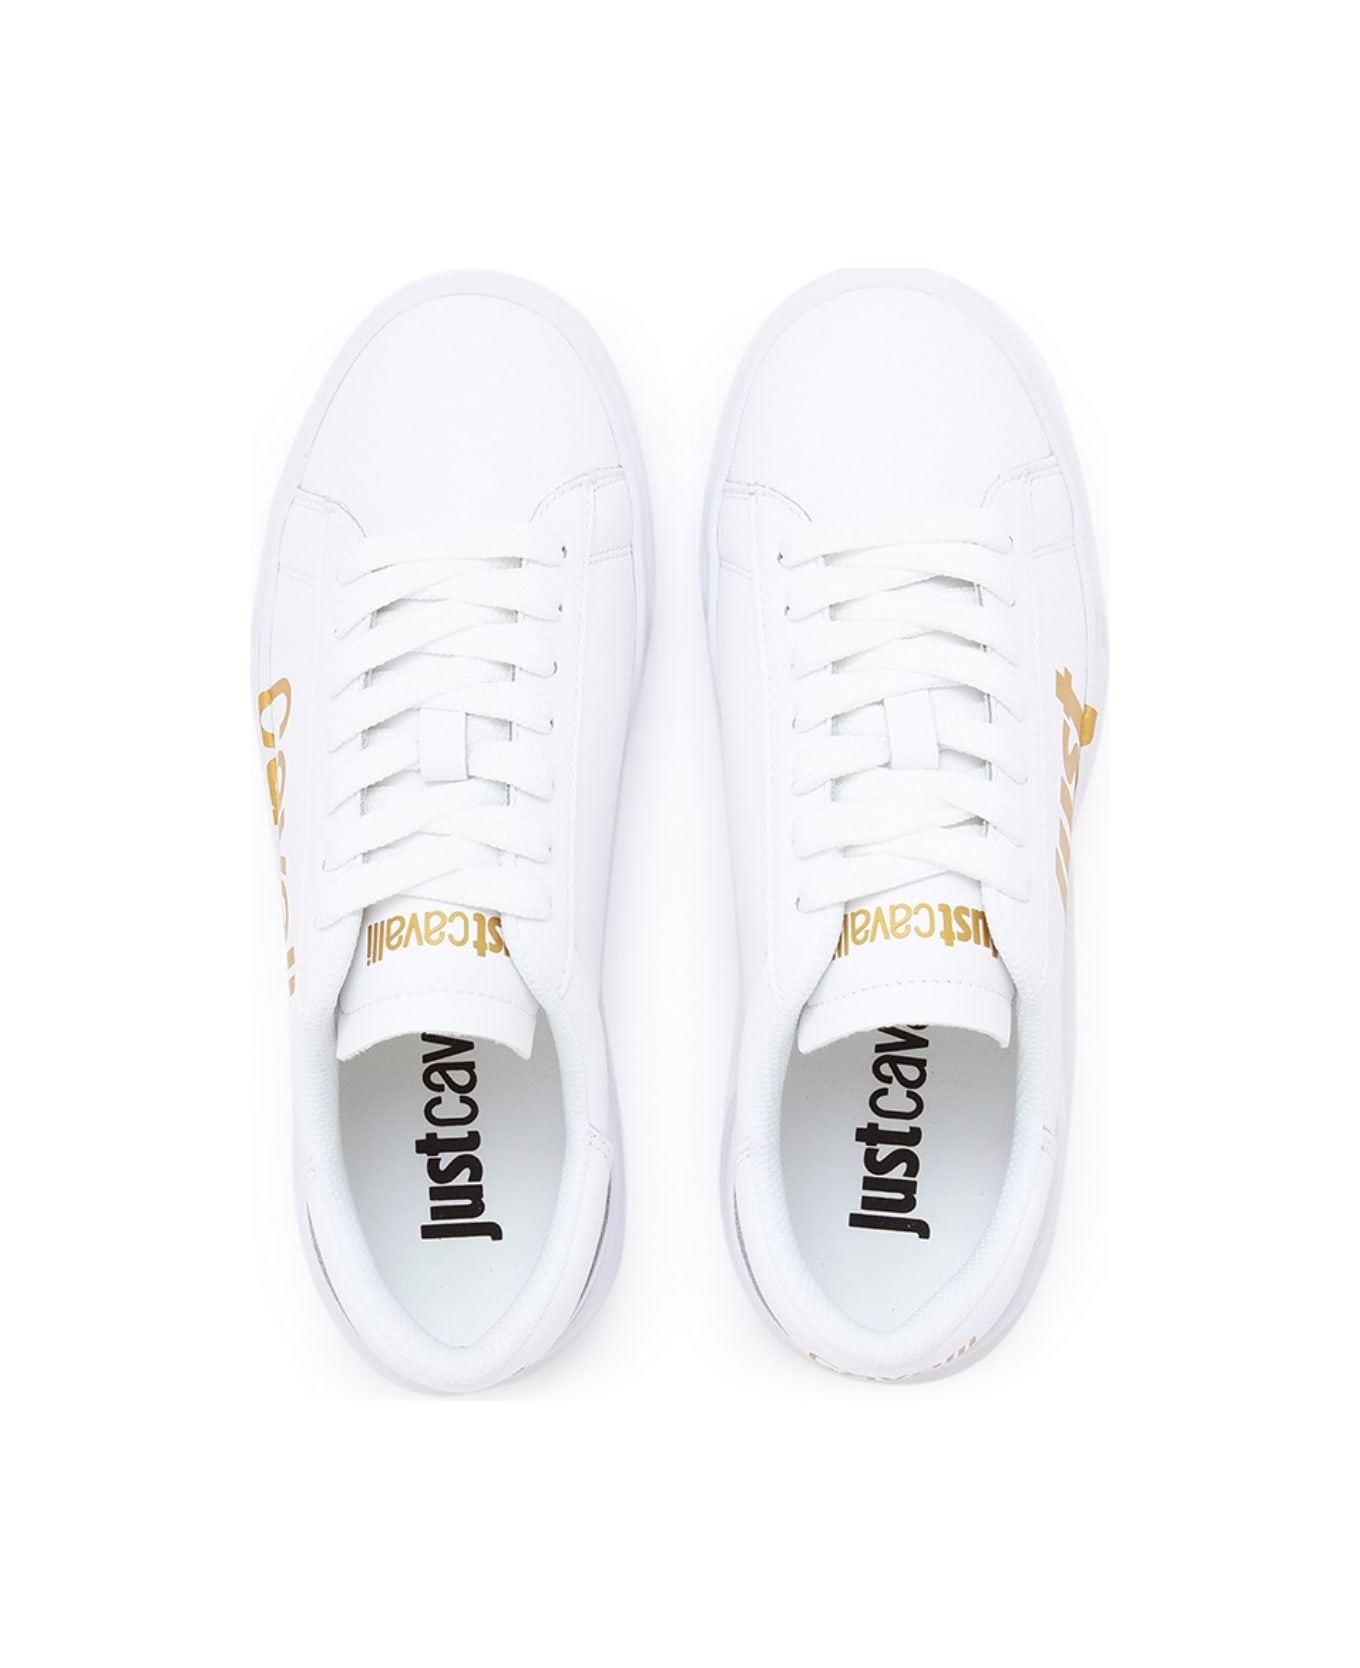 Just Cavalli Sneakers White - White